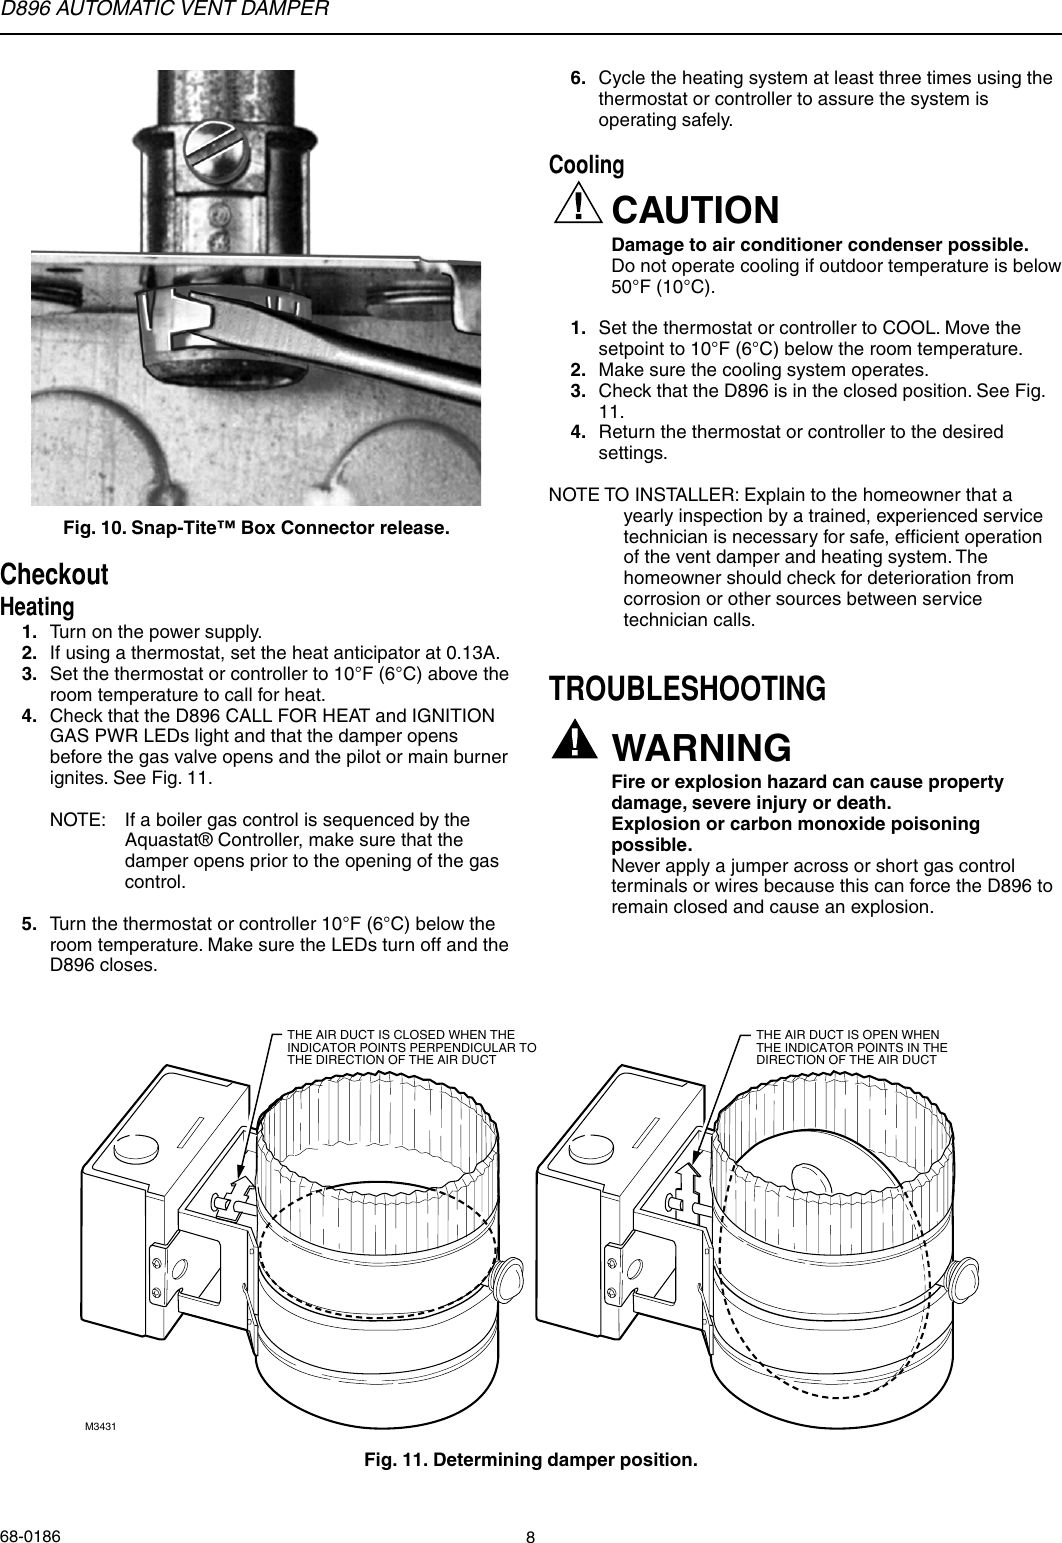 Page 8 of 12 - Honeywell Honeywell-Automatic-Vent-Damper-D896-Users-Manual- 68-0186 - D896 Automatic Vent Damper  Honeywell-automatic-vent-damper-d896-users-manual